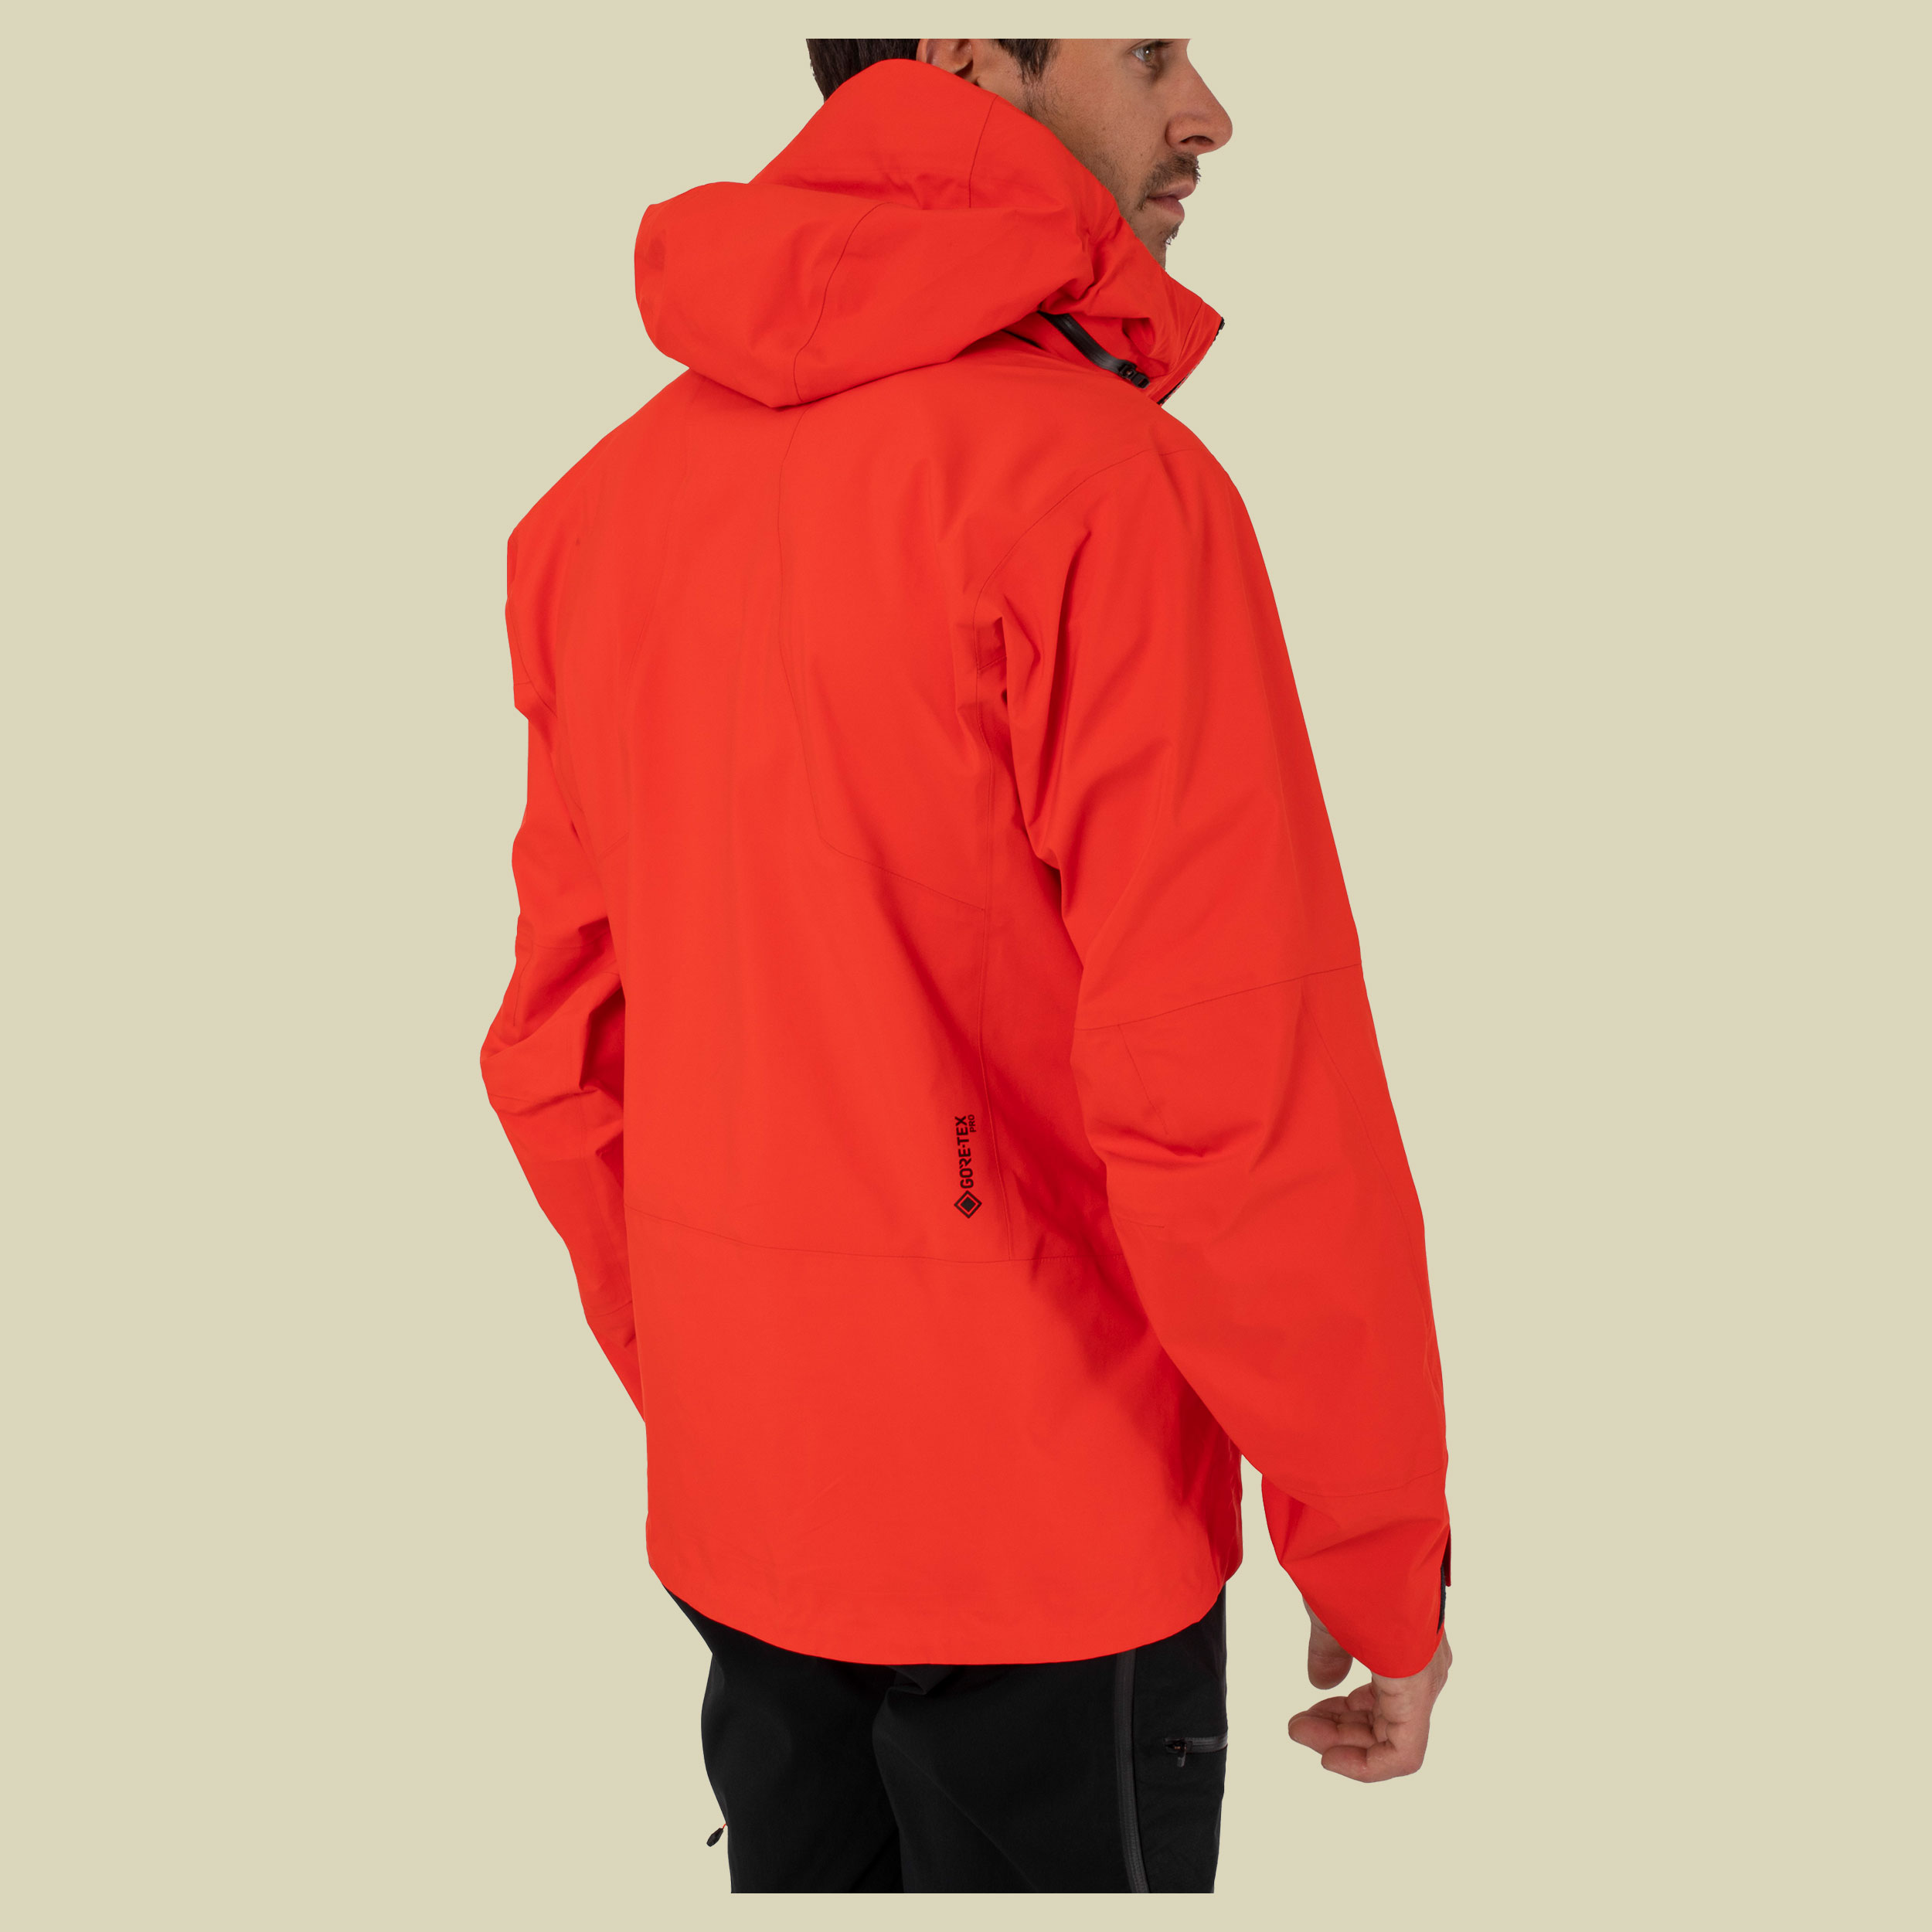 Ortles GTX Pro Jacket Men Größe M  Farbe flame